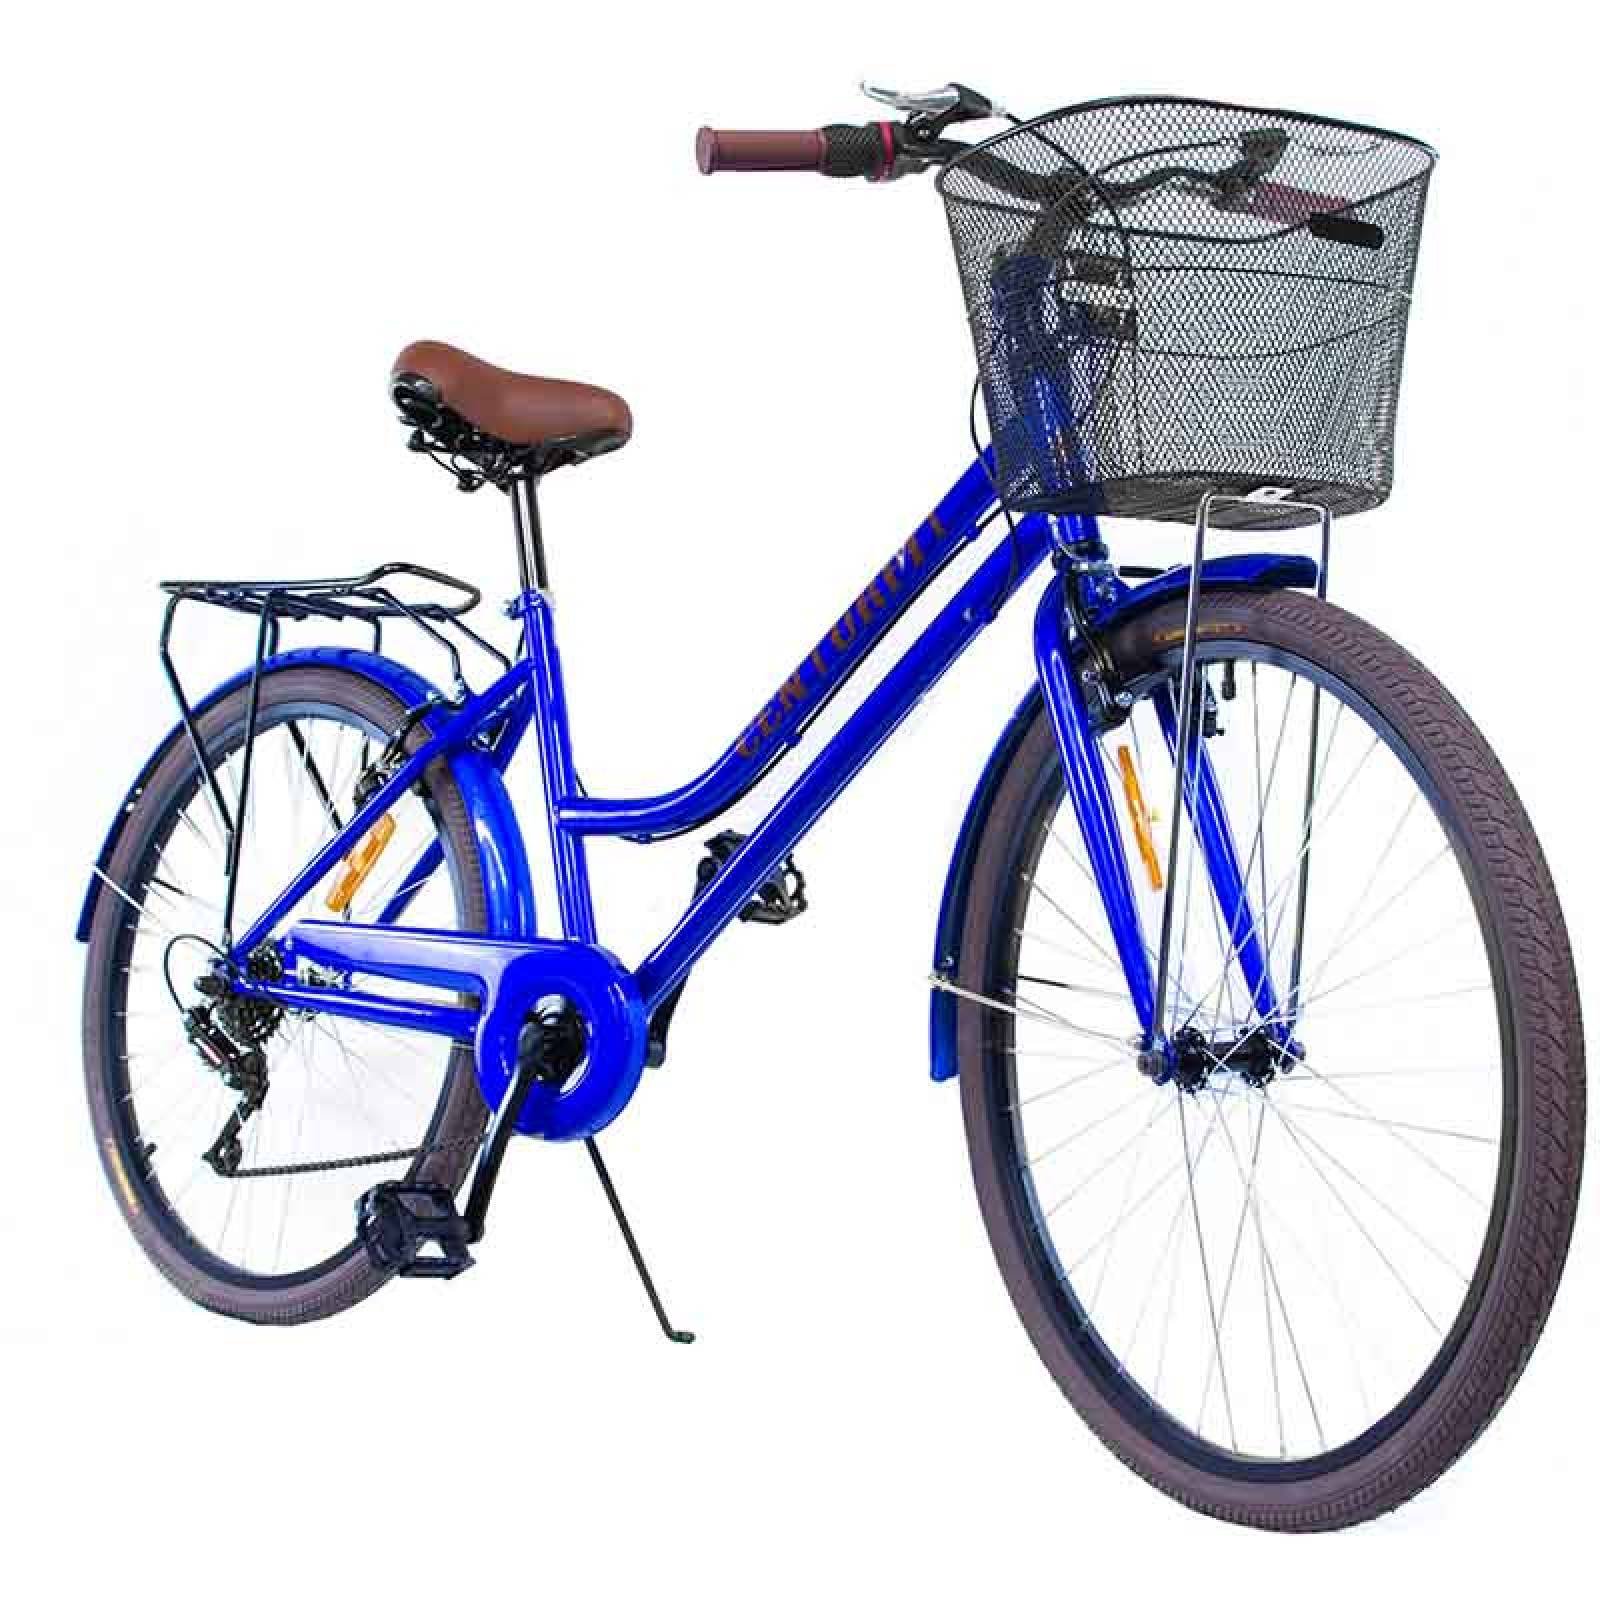 Bicicleta Vintage 6 Velocidades Freno de Mano Rodada 26 Canastilla Bici Urbana Retro Azul